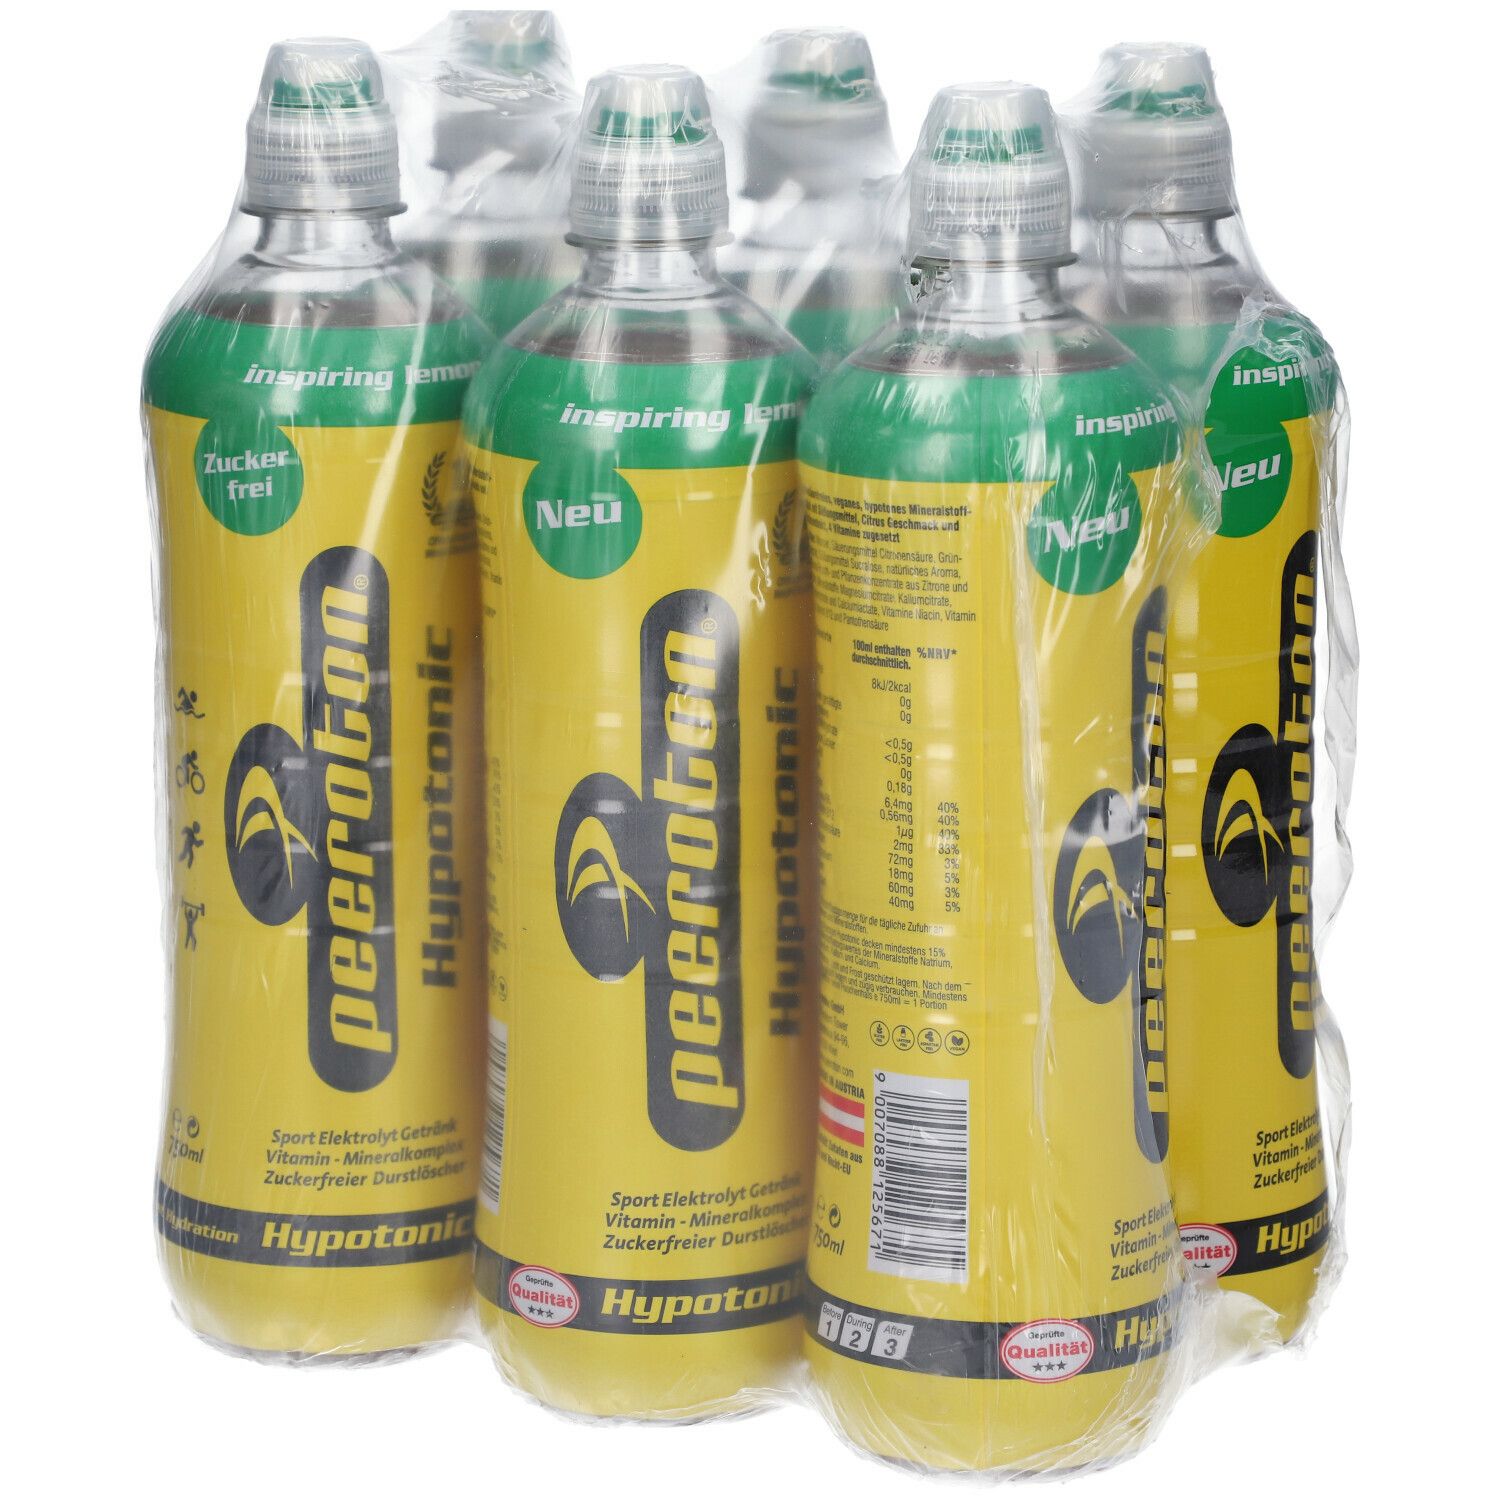 peeroton® Hypotonic Sports Drink, Inspiring Lemon